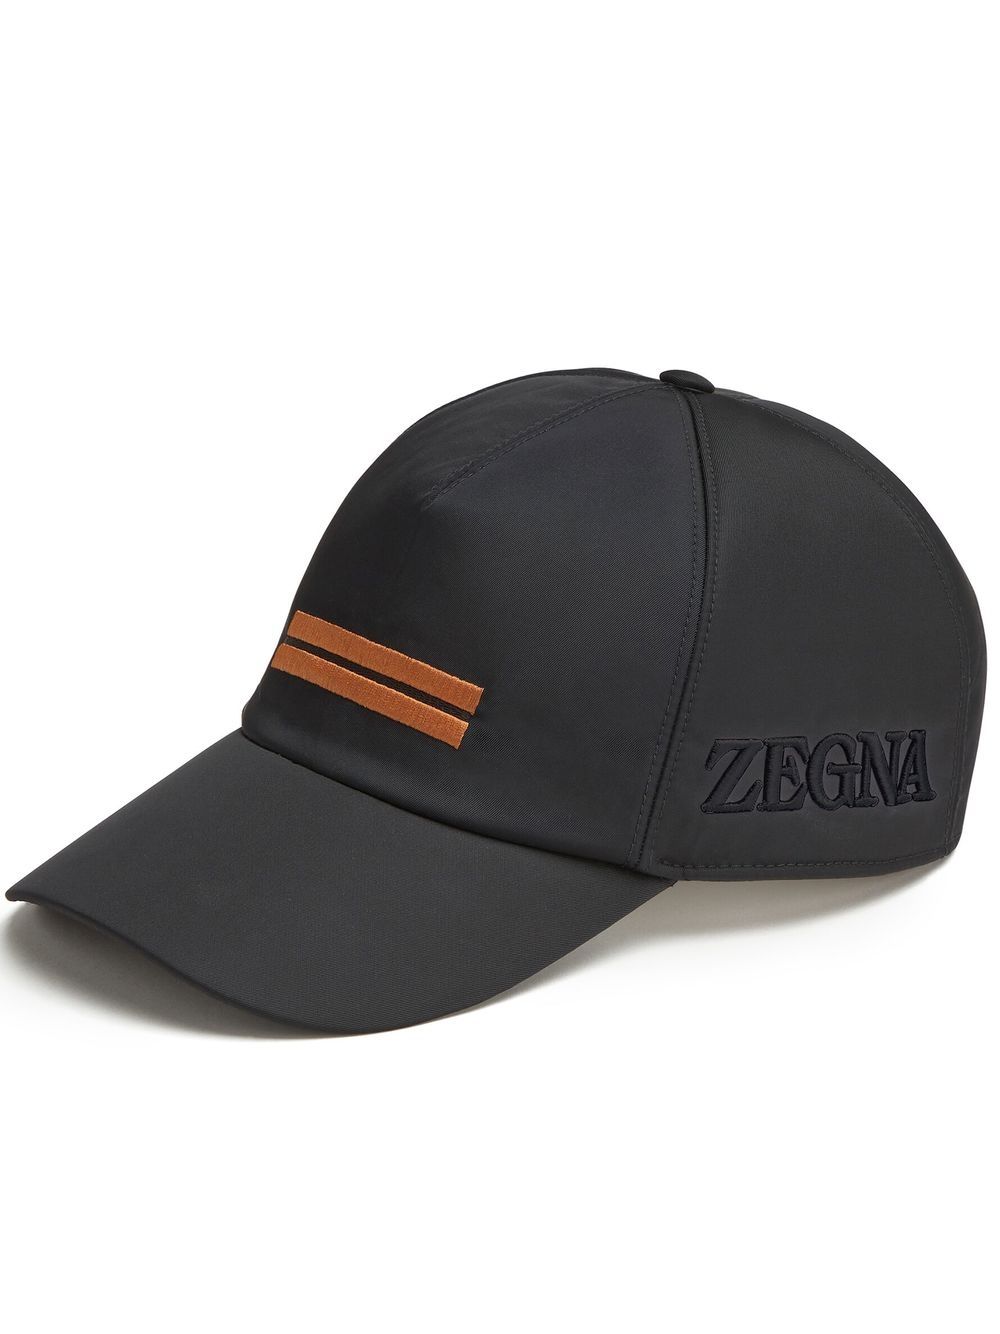 Zegna Technical embroidered cap - Black von Zegna